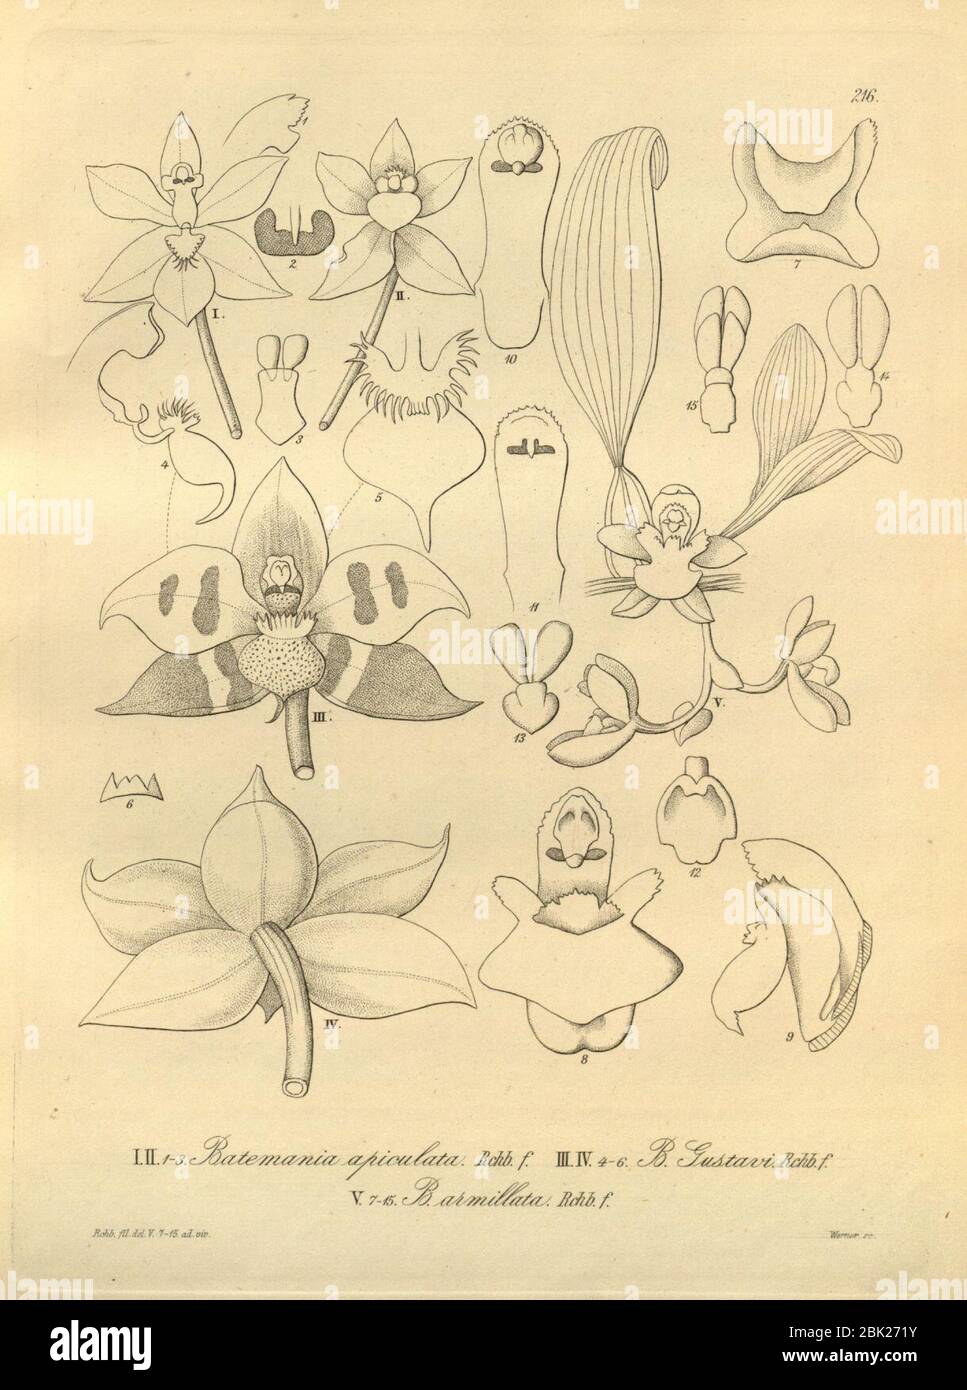 Huntleya apiculata (as Batemannia apiculata)- Huntleya gustavii (as Batemannia gustavii) - Batemannia armillata - Xenia 3-216 (1881). Stock Photo